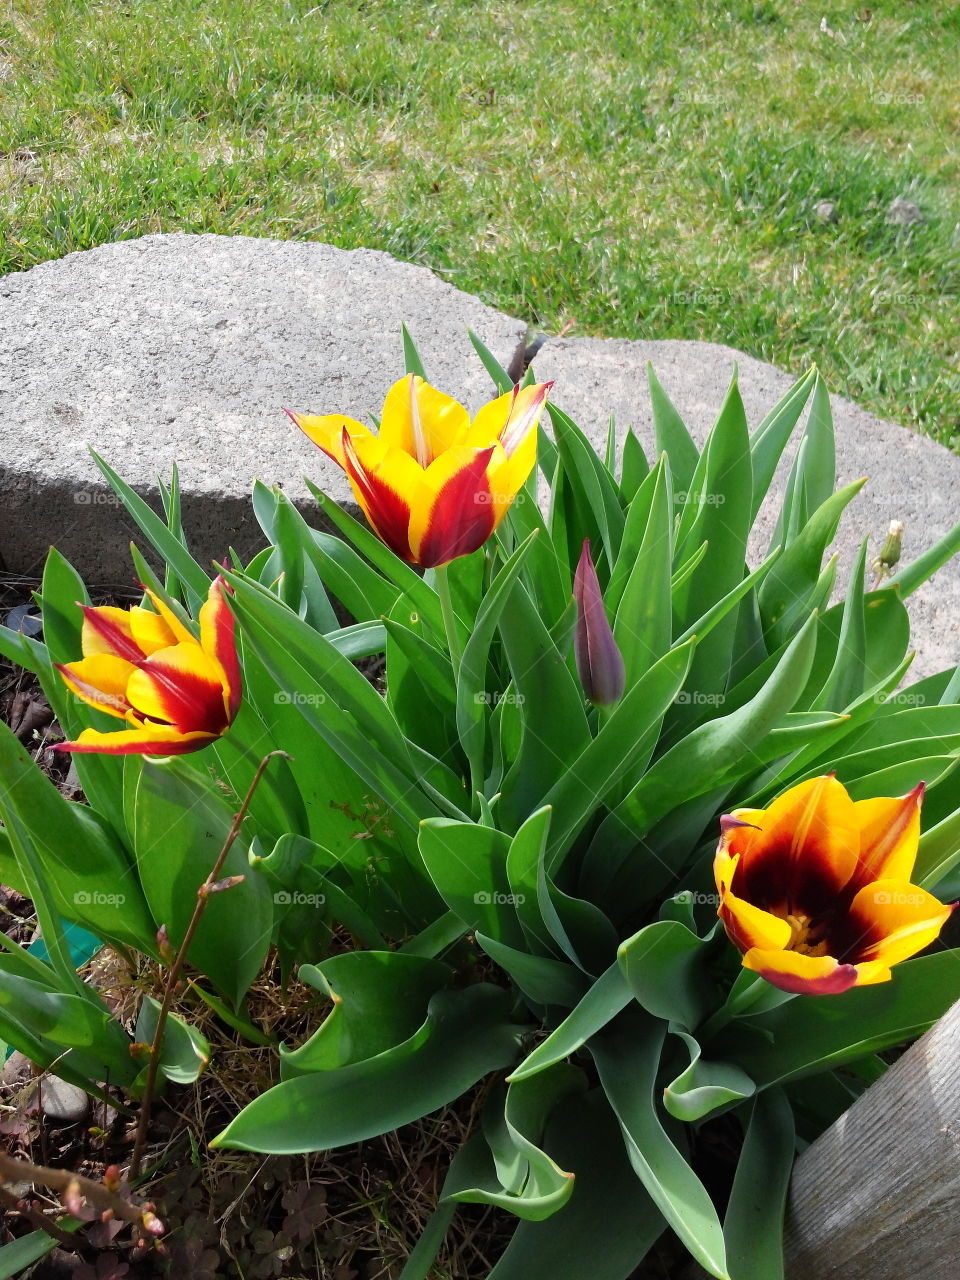 Firecracker tulips